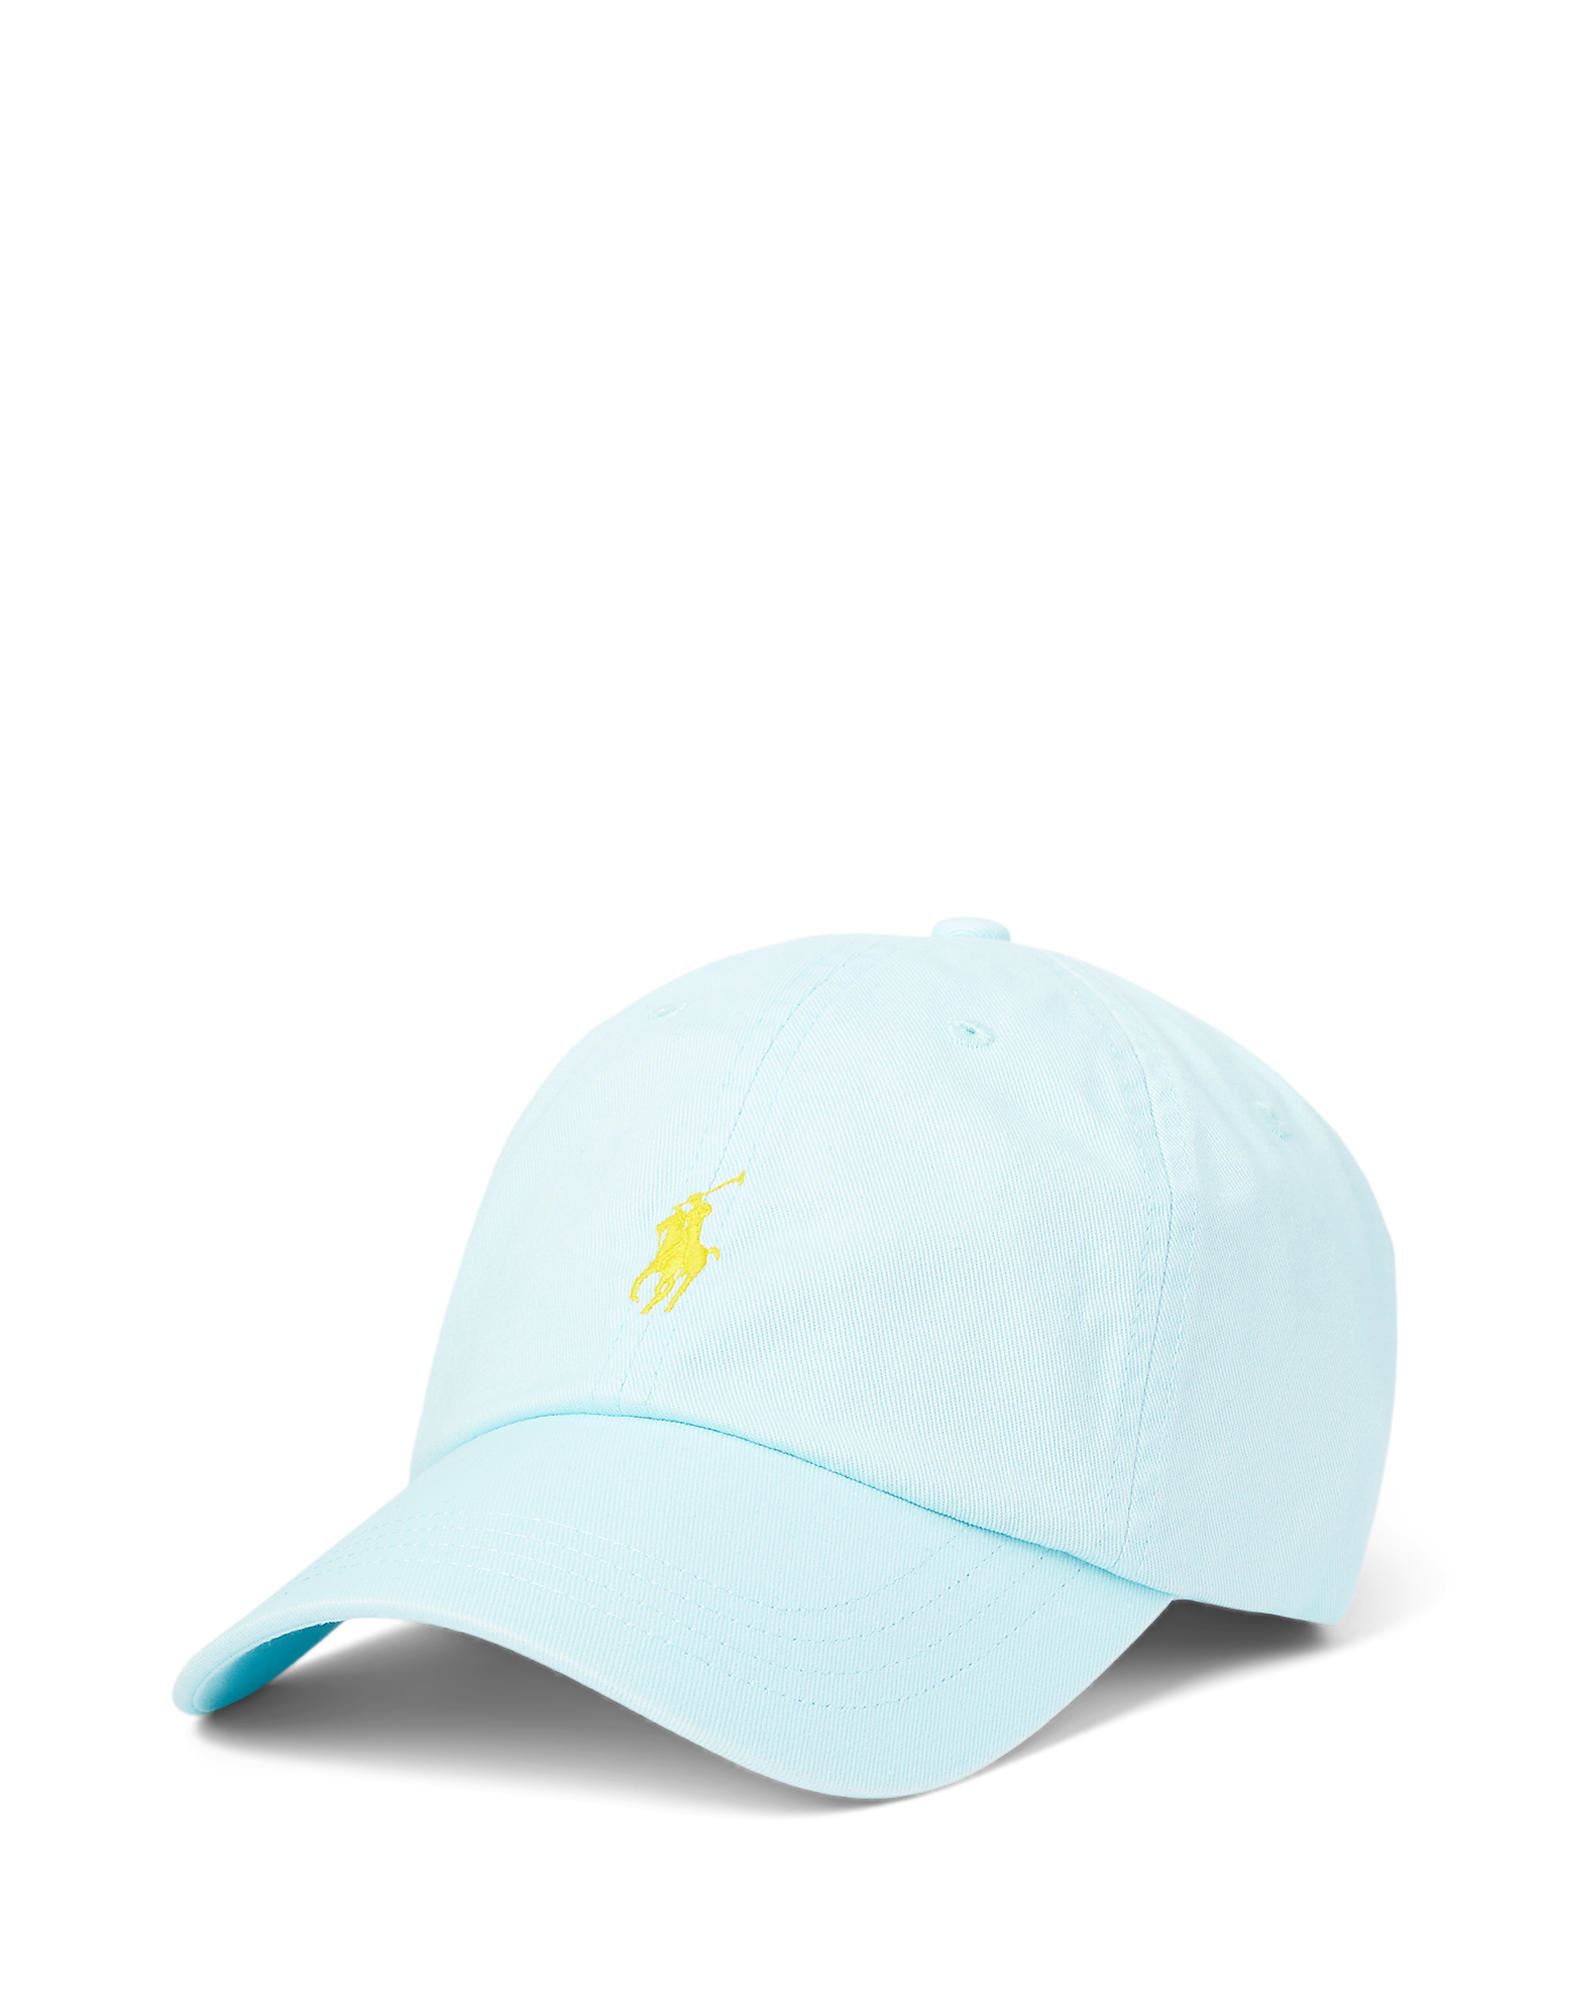 Polo Ralph Lauren Hats In Blue